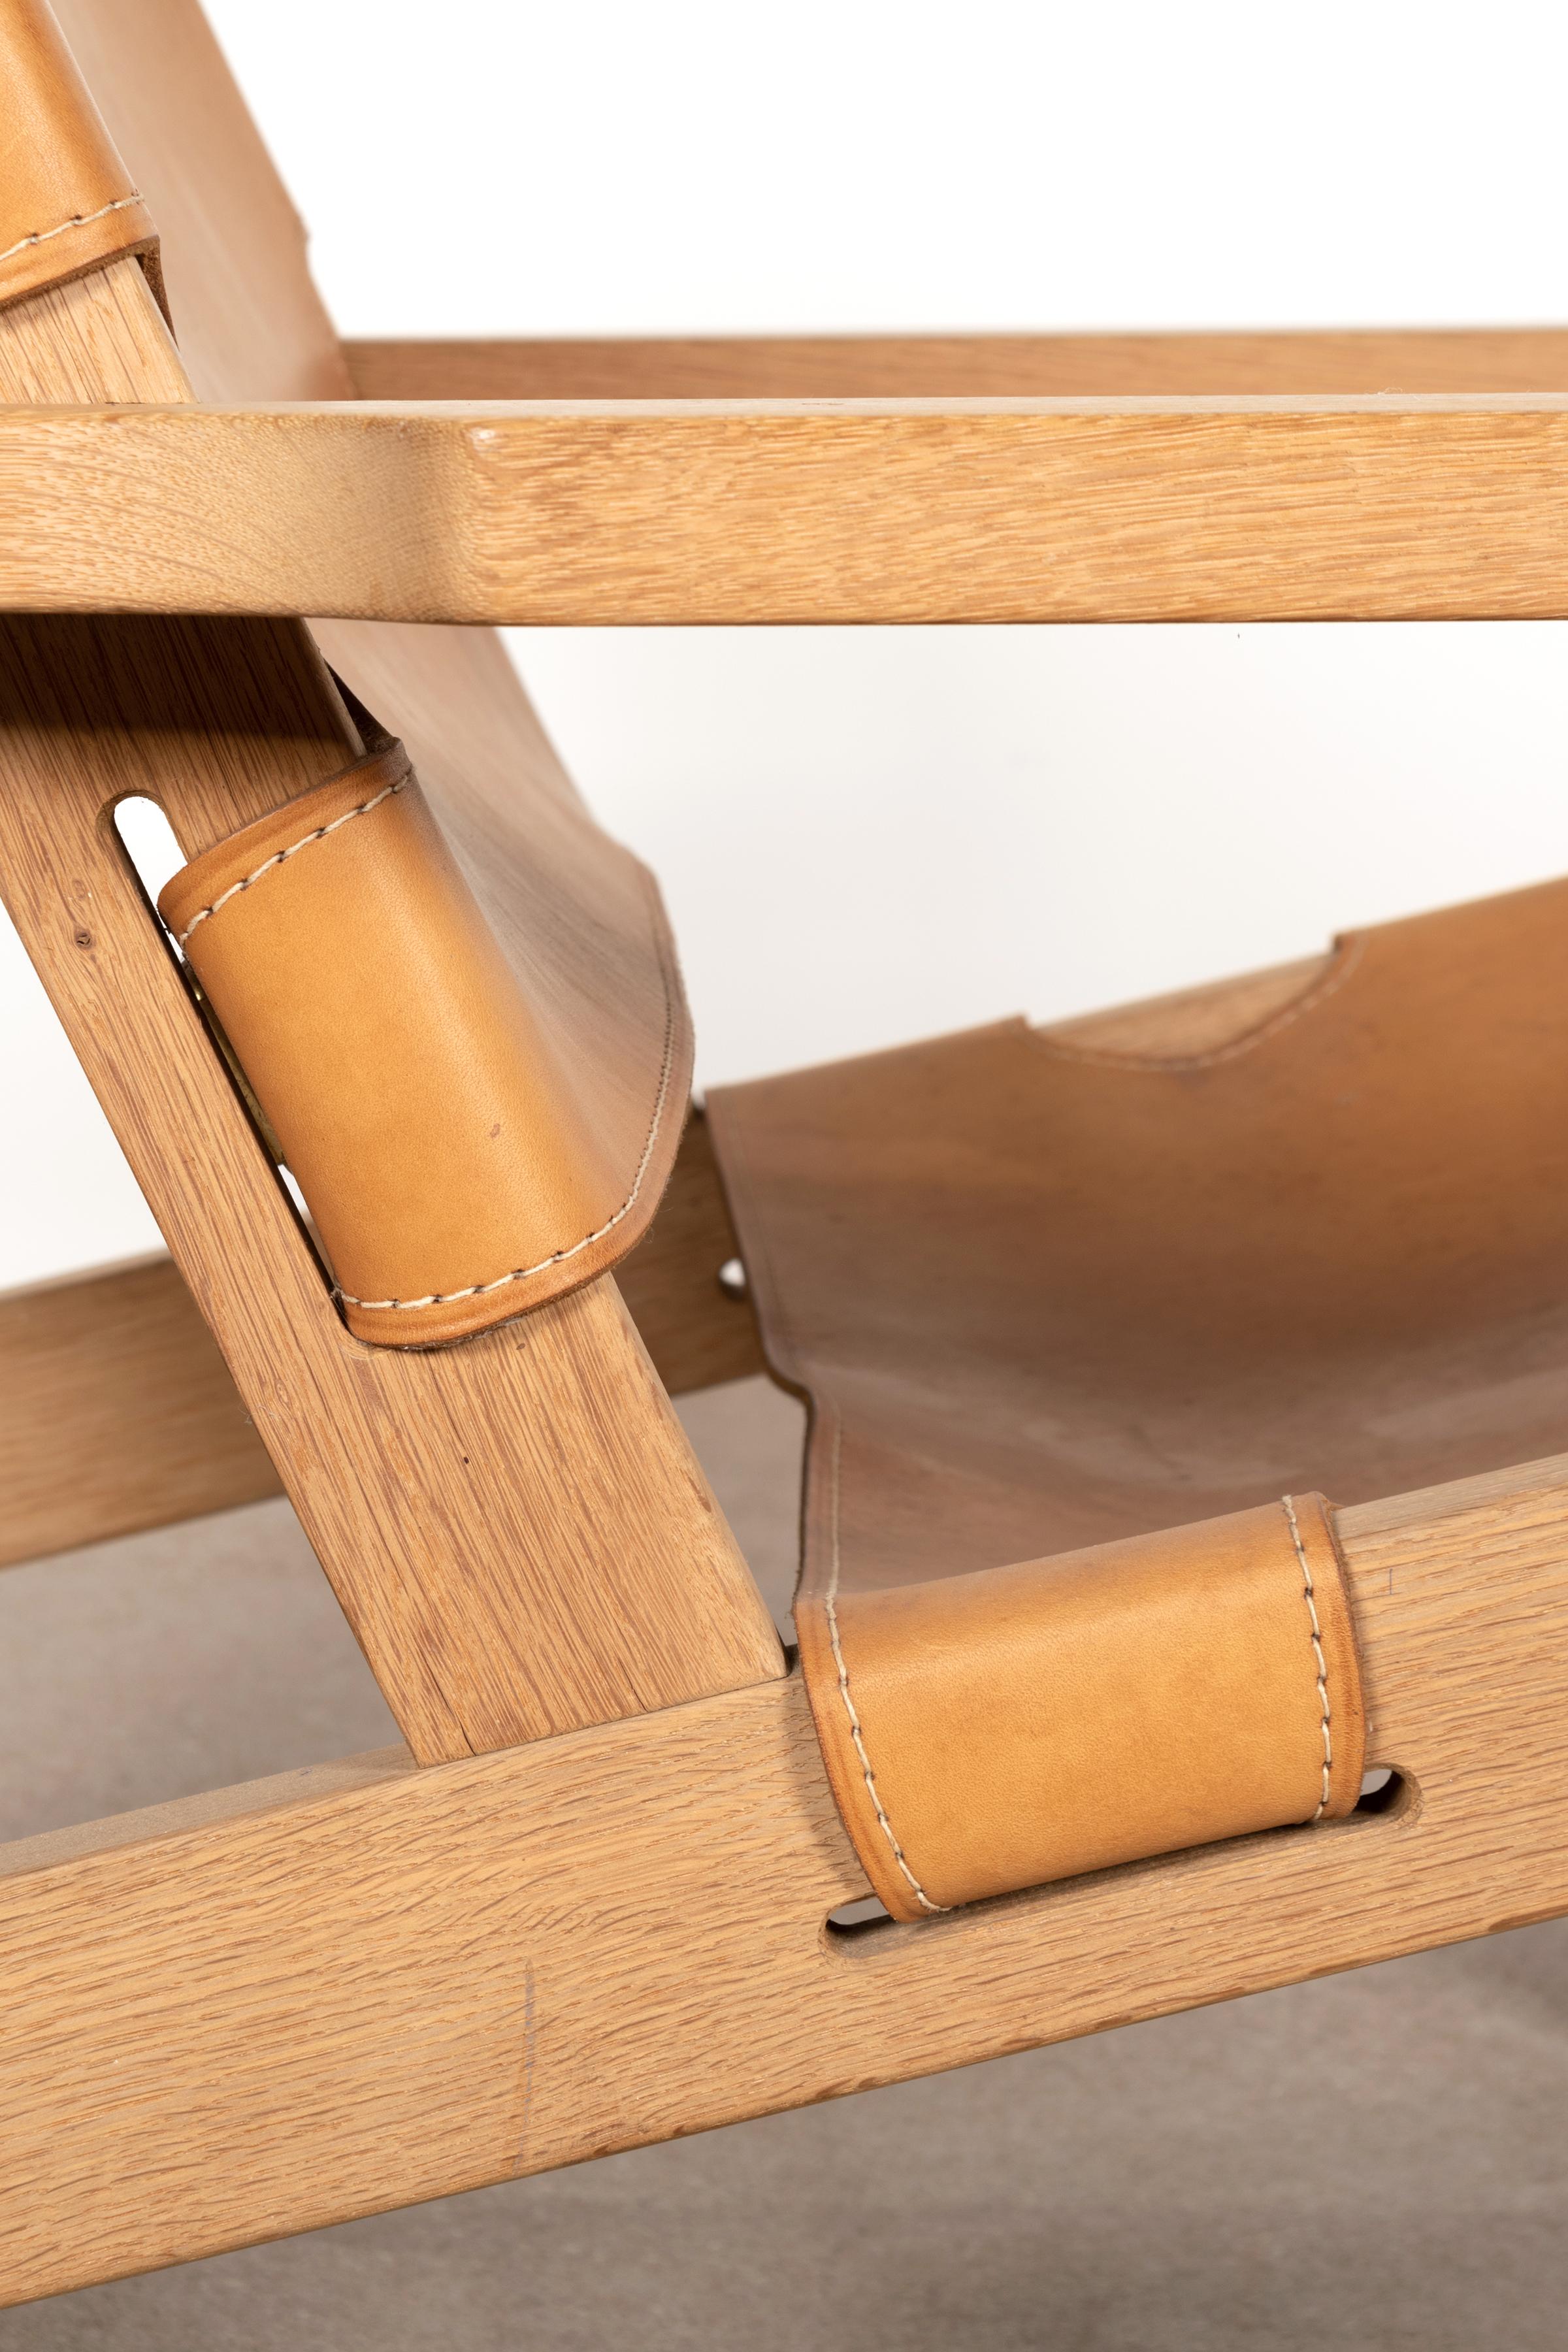 Kurt Østervig Hunting Chairs in Cognac Leather for K. P. Jørgensens Møbelfabrik 2